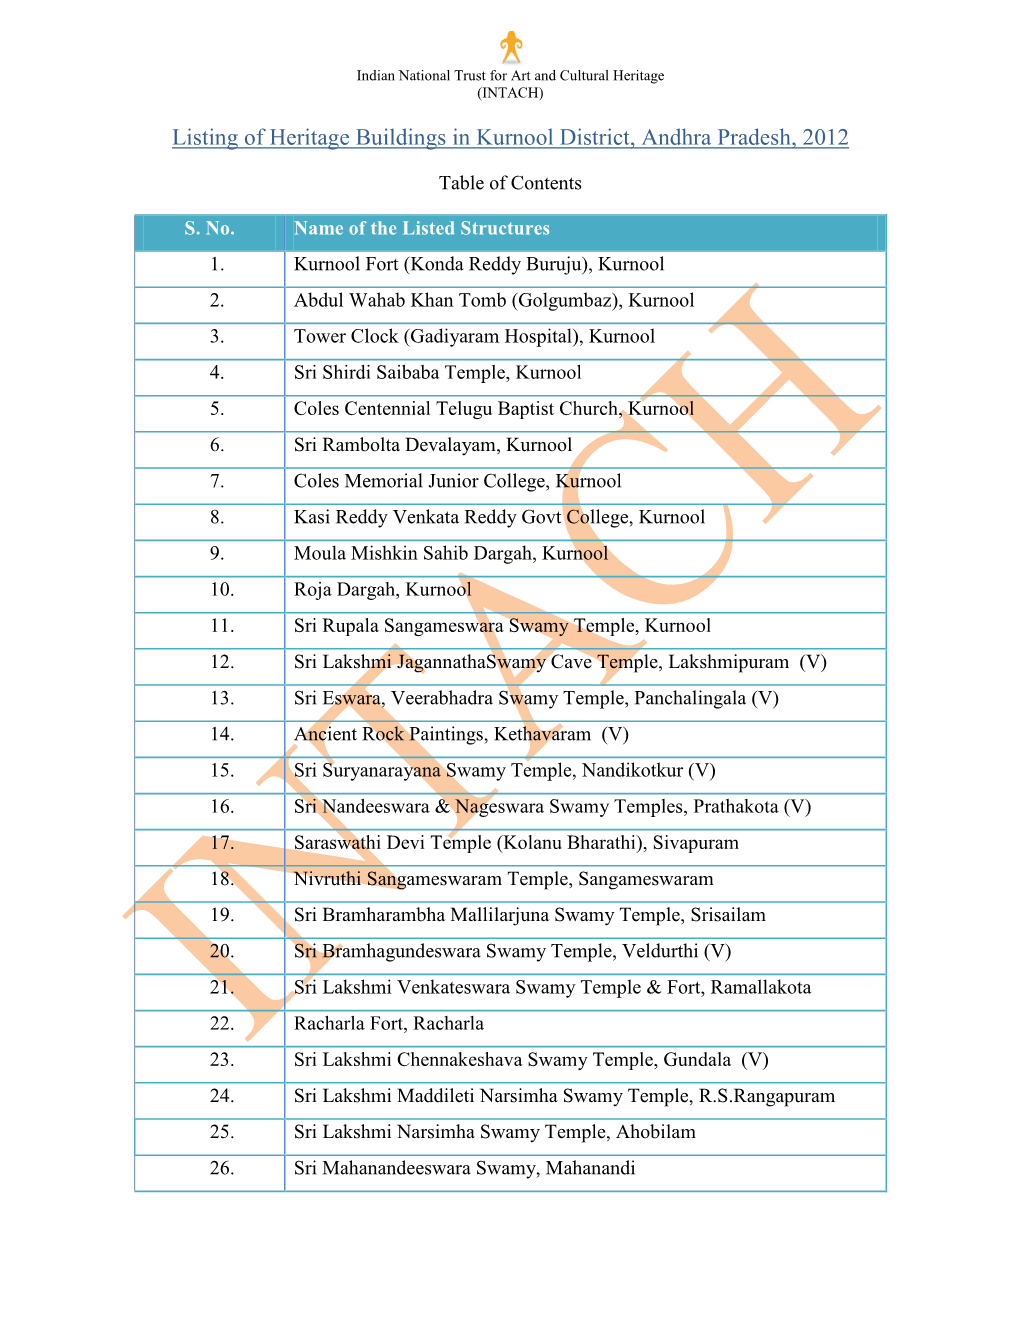 Listing of Heritage Buildings in Kurnool District, Andhra Pradesh, 2012